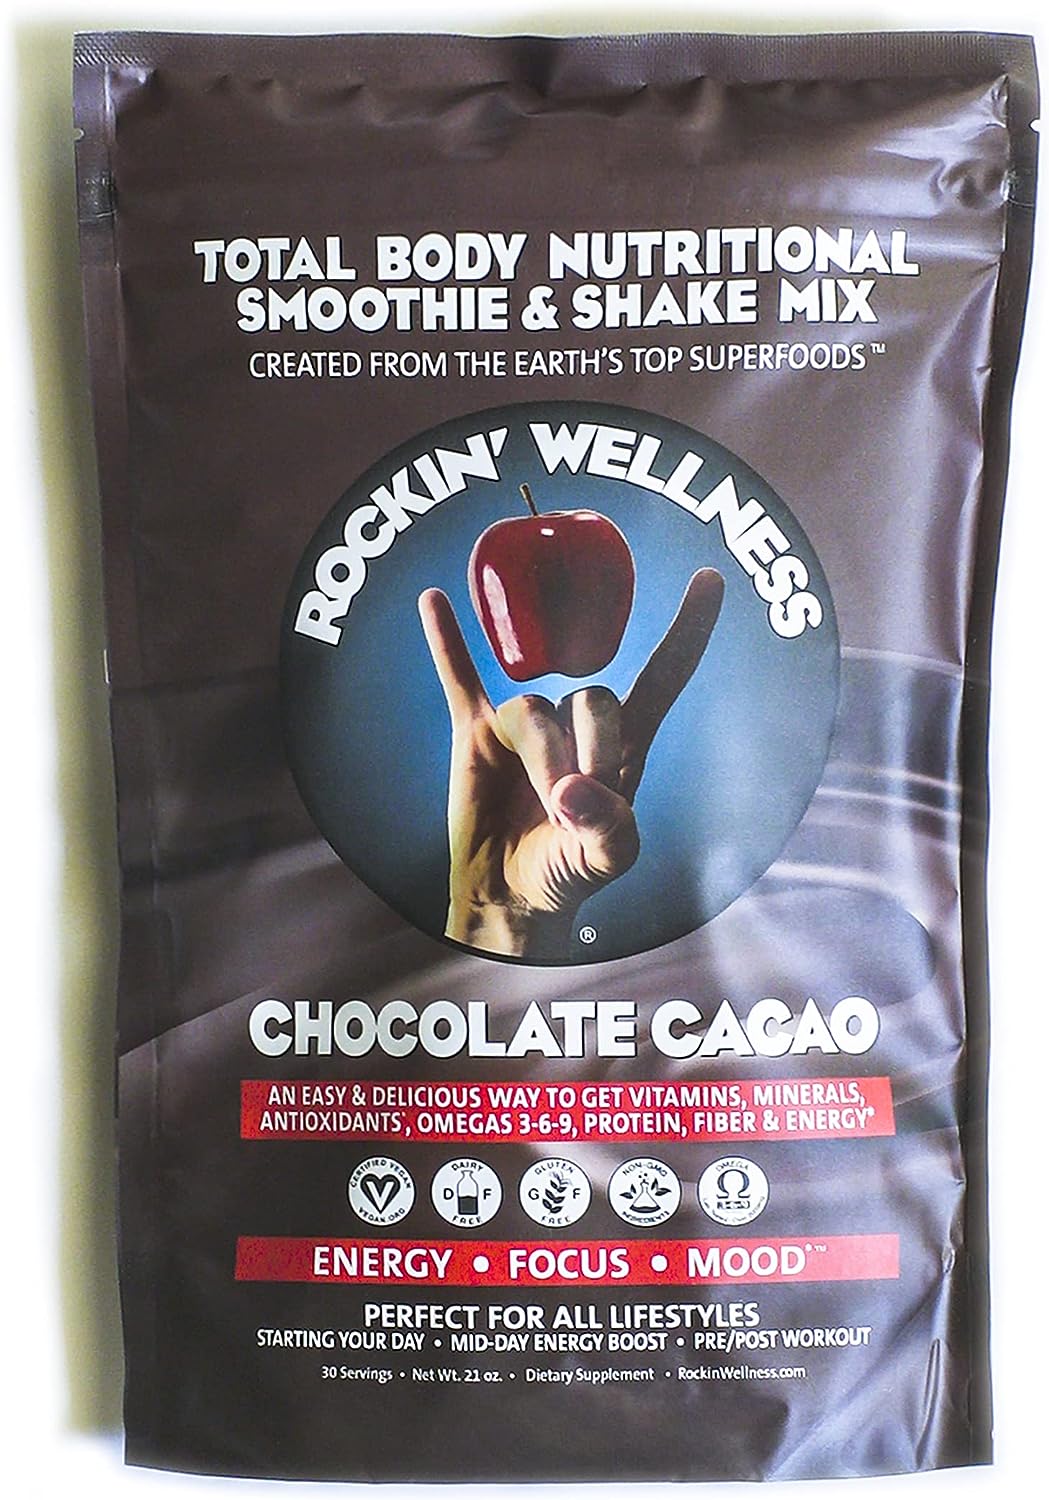 Vegan Chocolate Cacao Nutritional Mix